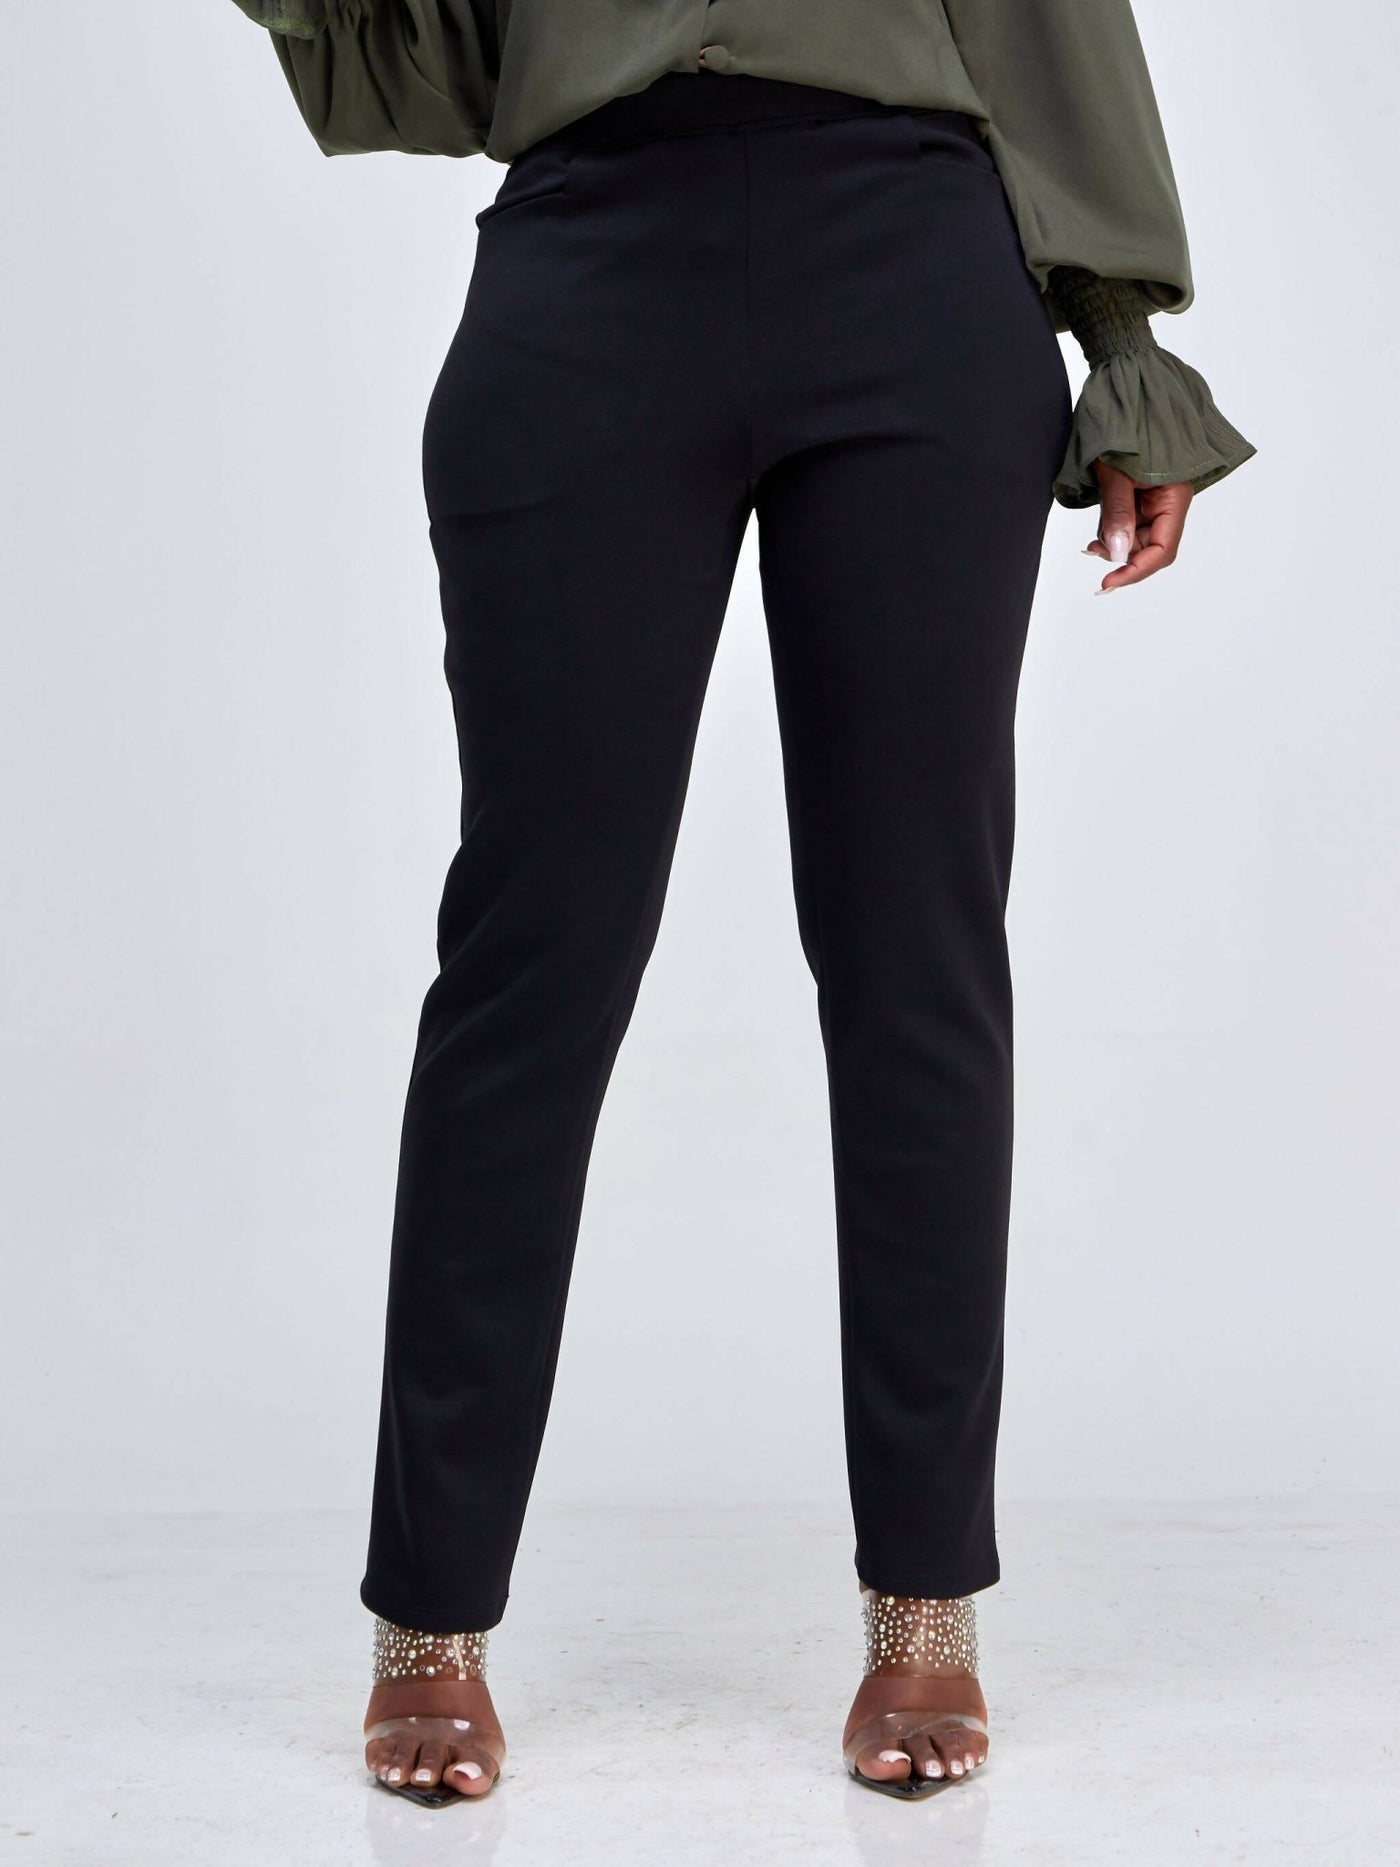 Elsie Glamour Luna Official Pants - Black - Shopzetu